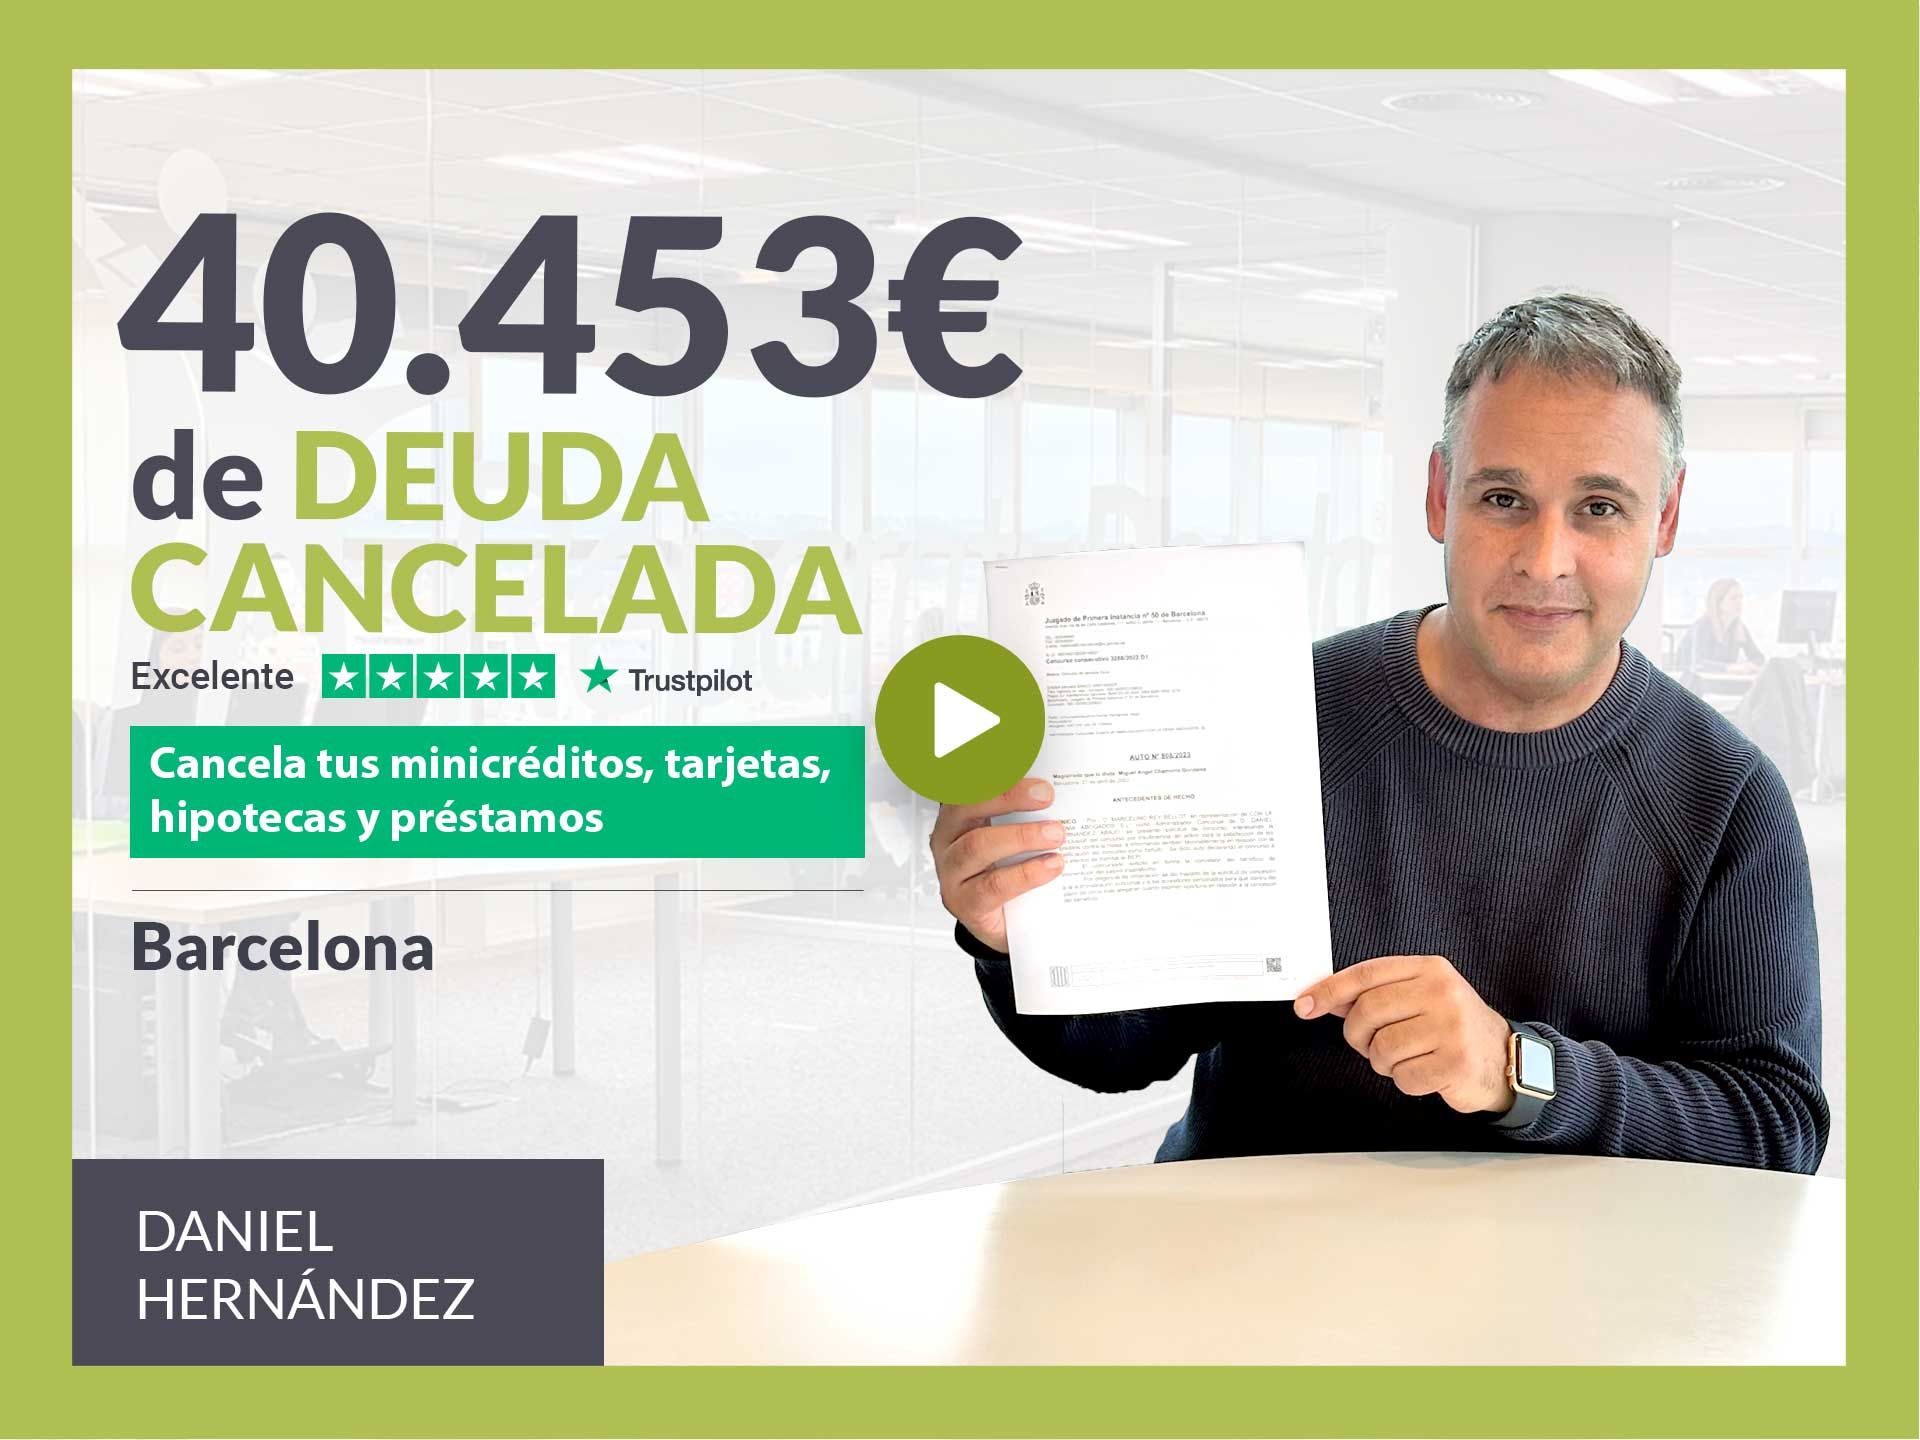 Fotografia Repara tu Deuda Abogados cancela 40.453 € en Barcelona